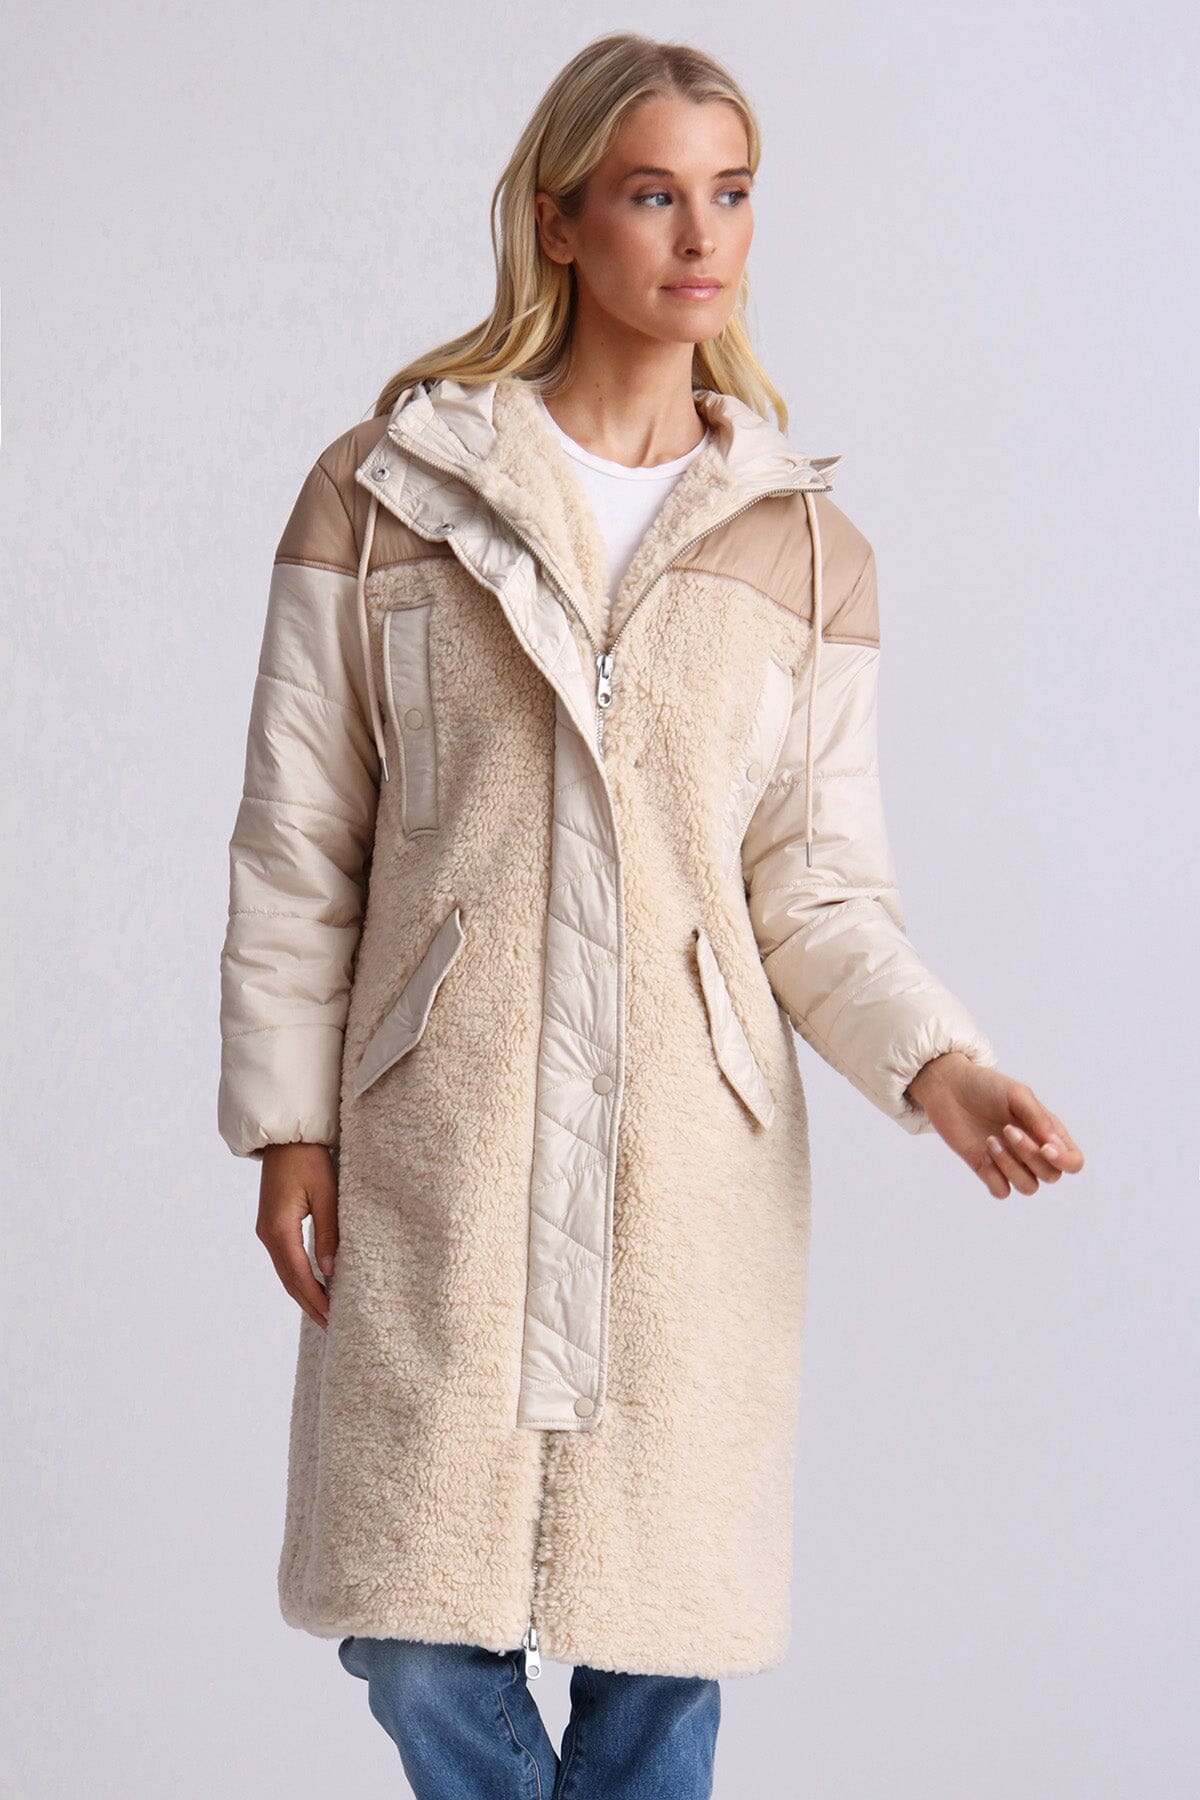 Oat beige faux fur quilted anorak long coat jacket - women's figure flattering outerwear for fall fashion trends